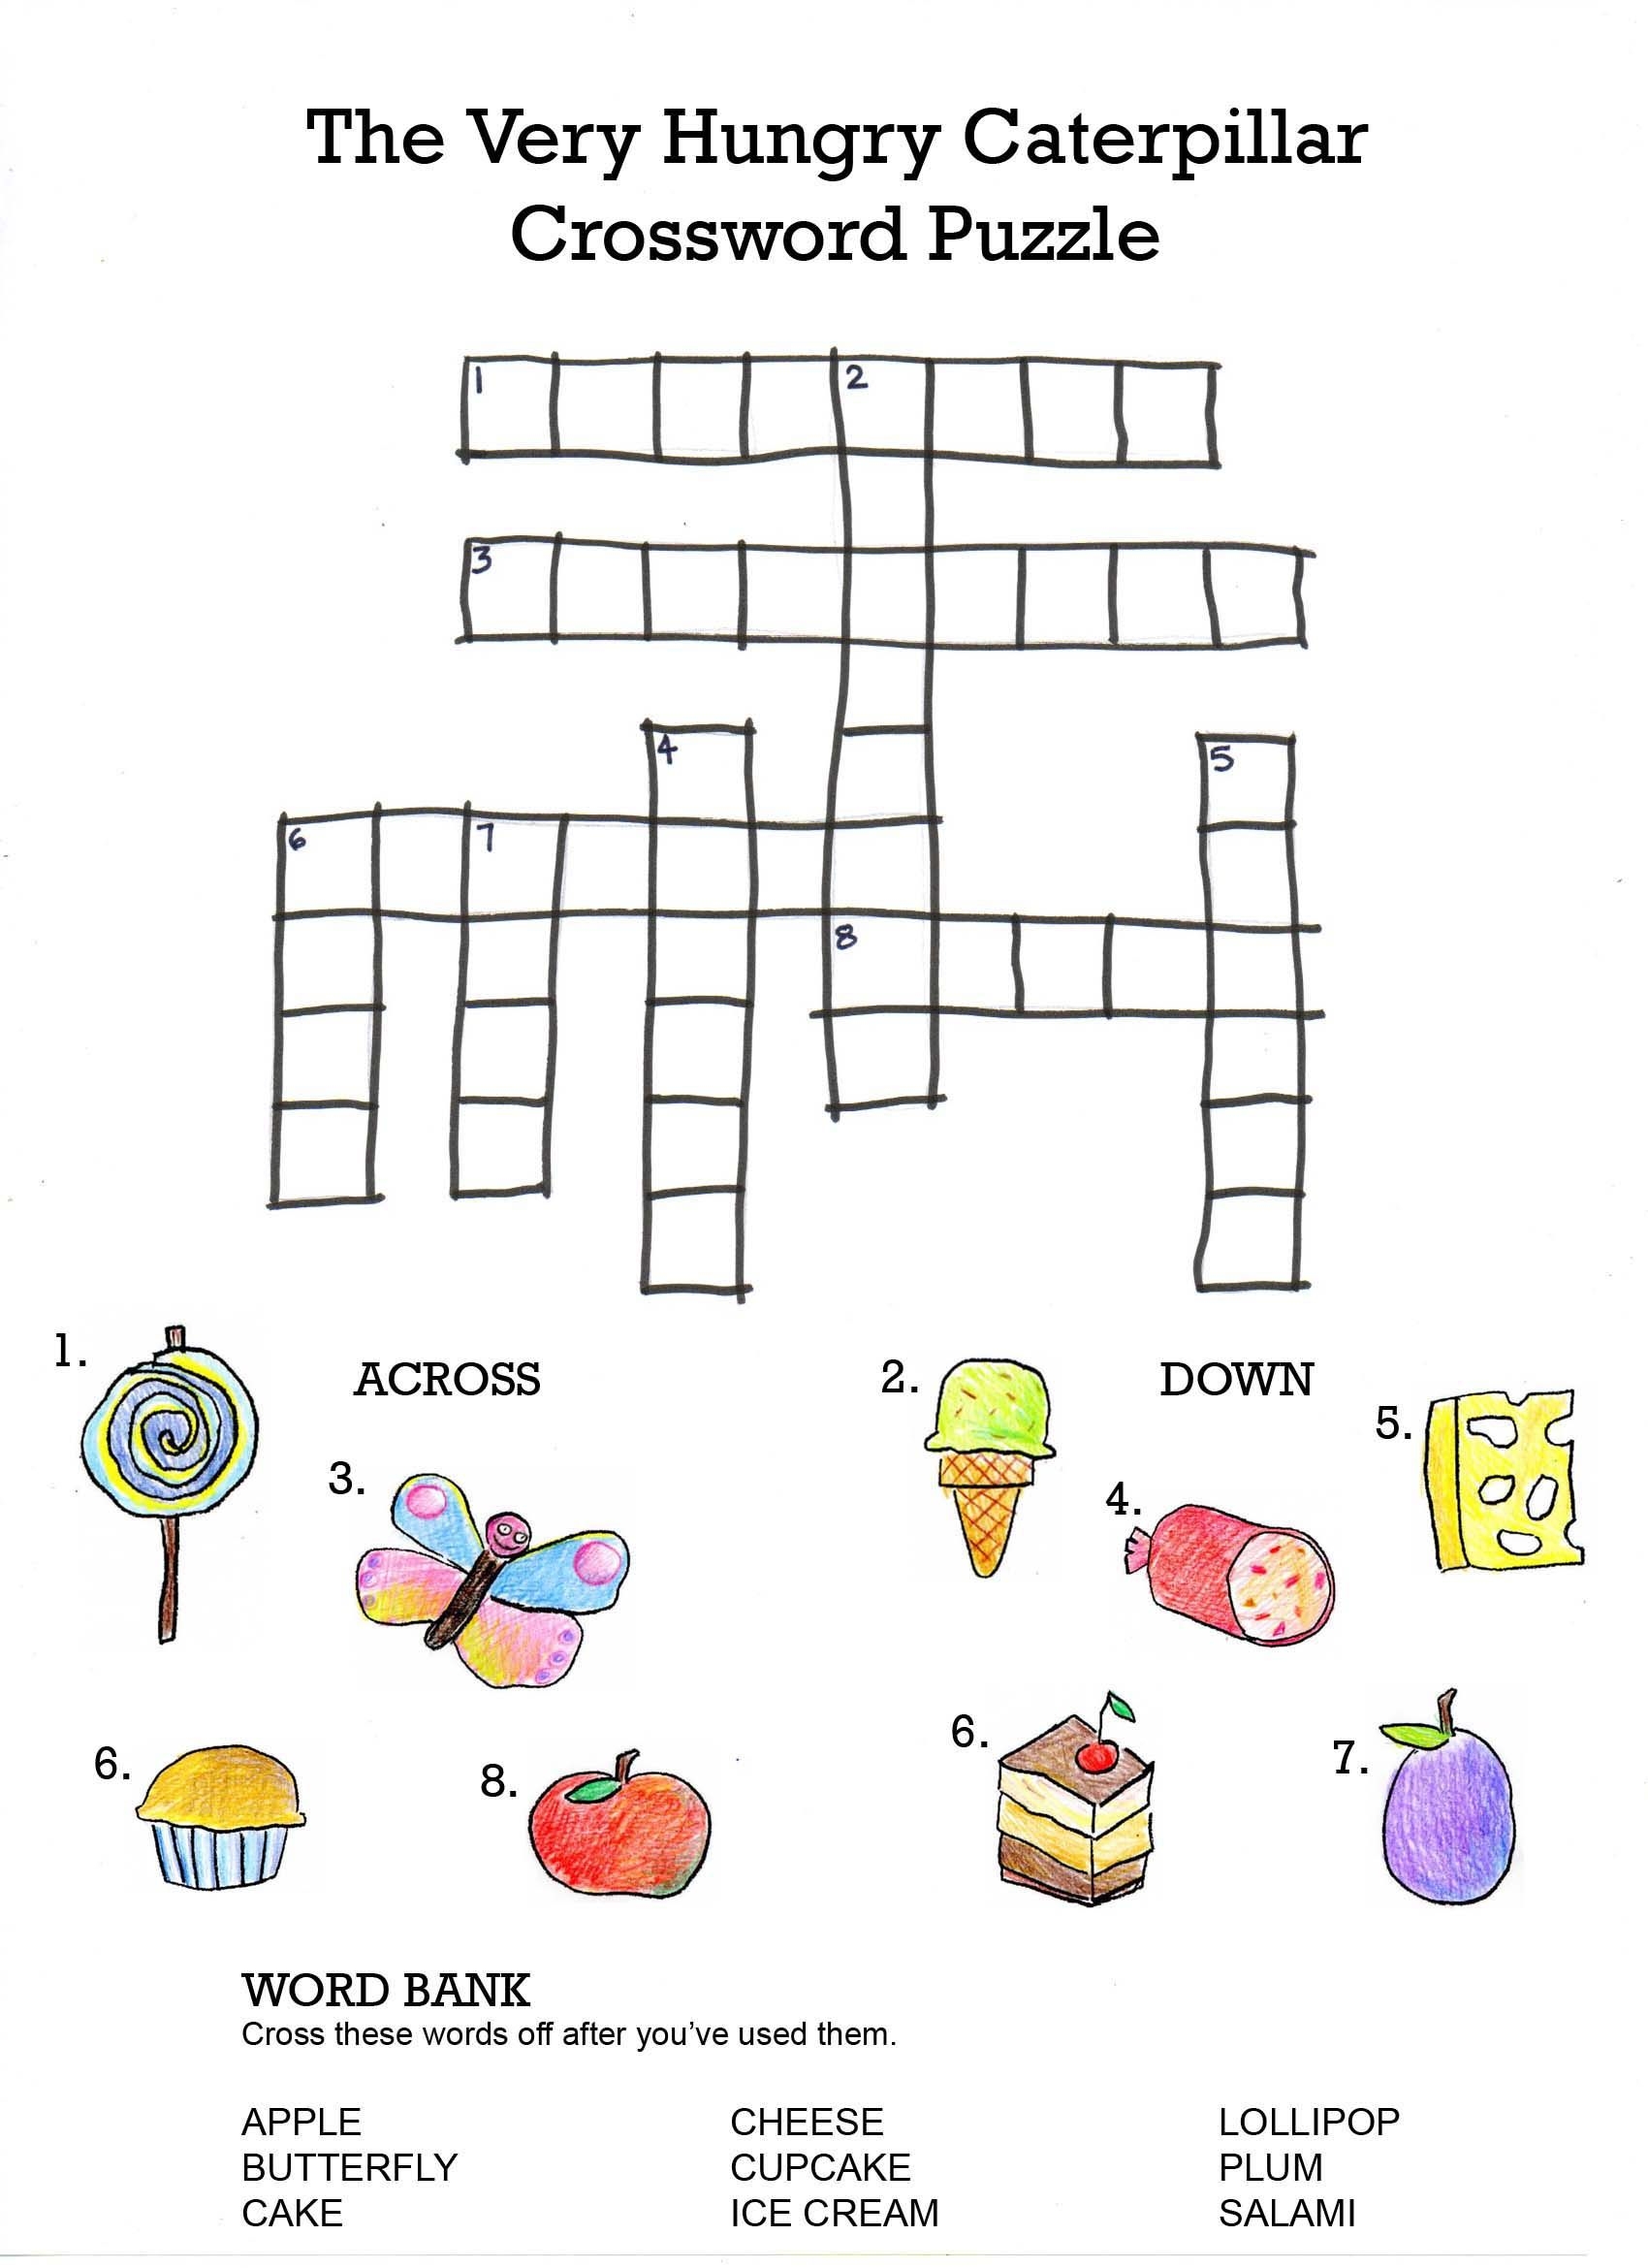 The Very Hungry Caterpillar Crossword Printable Puzzles For Kids Crossword Puzzles Crossword - Free Easy Printable Crossword Puzzles For Kids